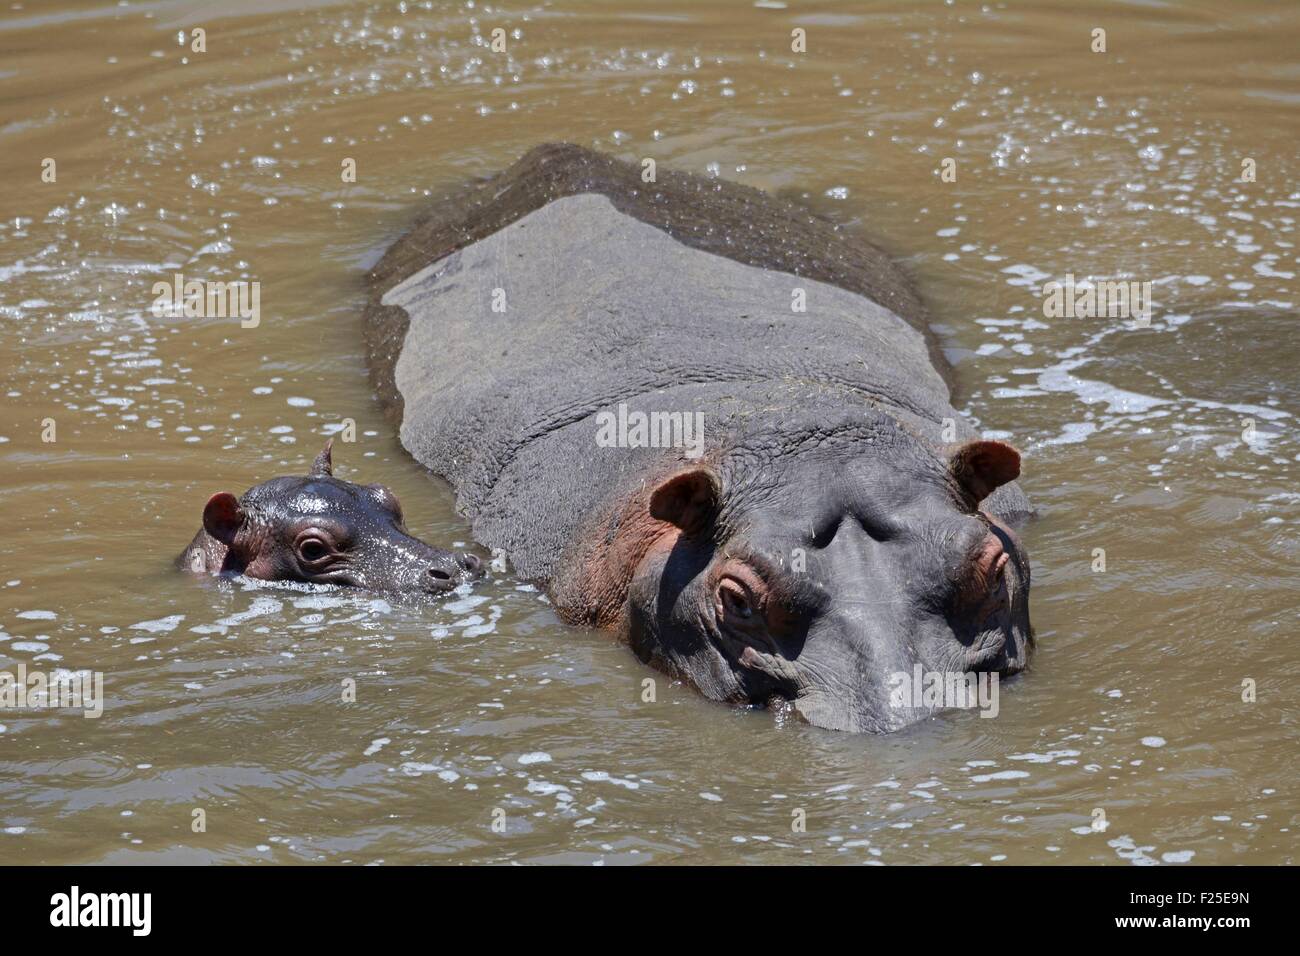 Kenia, Masai Mara Reserve, Nilpferd amphibische (Hippopotamus Amphibius), Mutter schützen ihre jungen in den Mara River Stockfoto